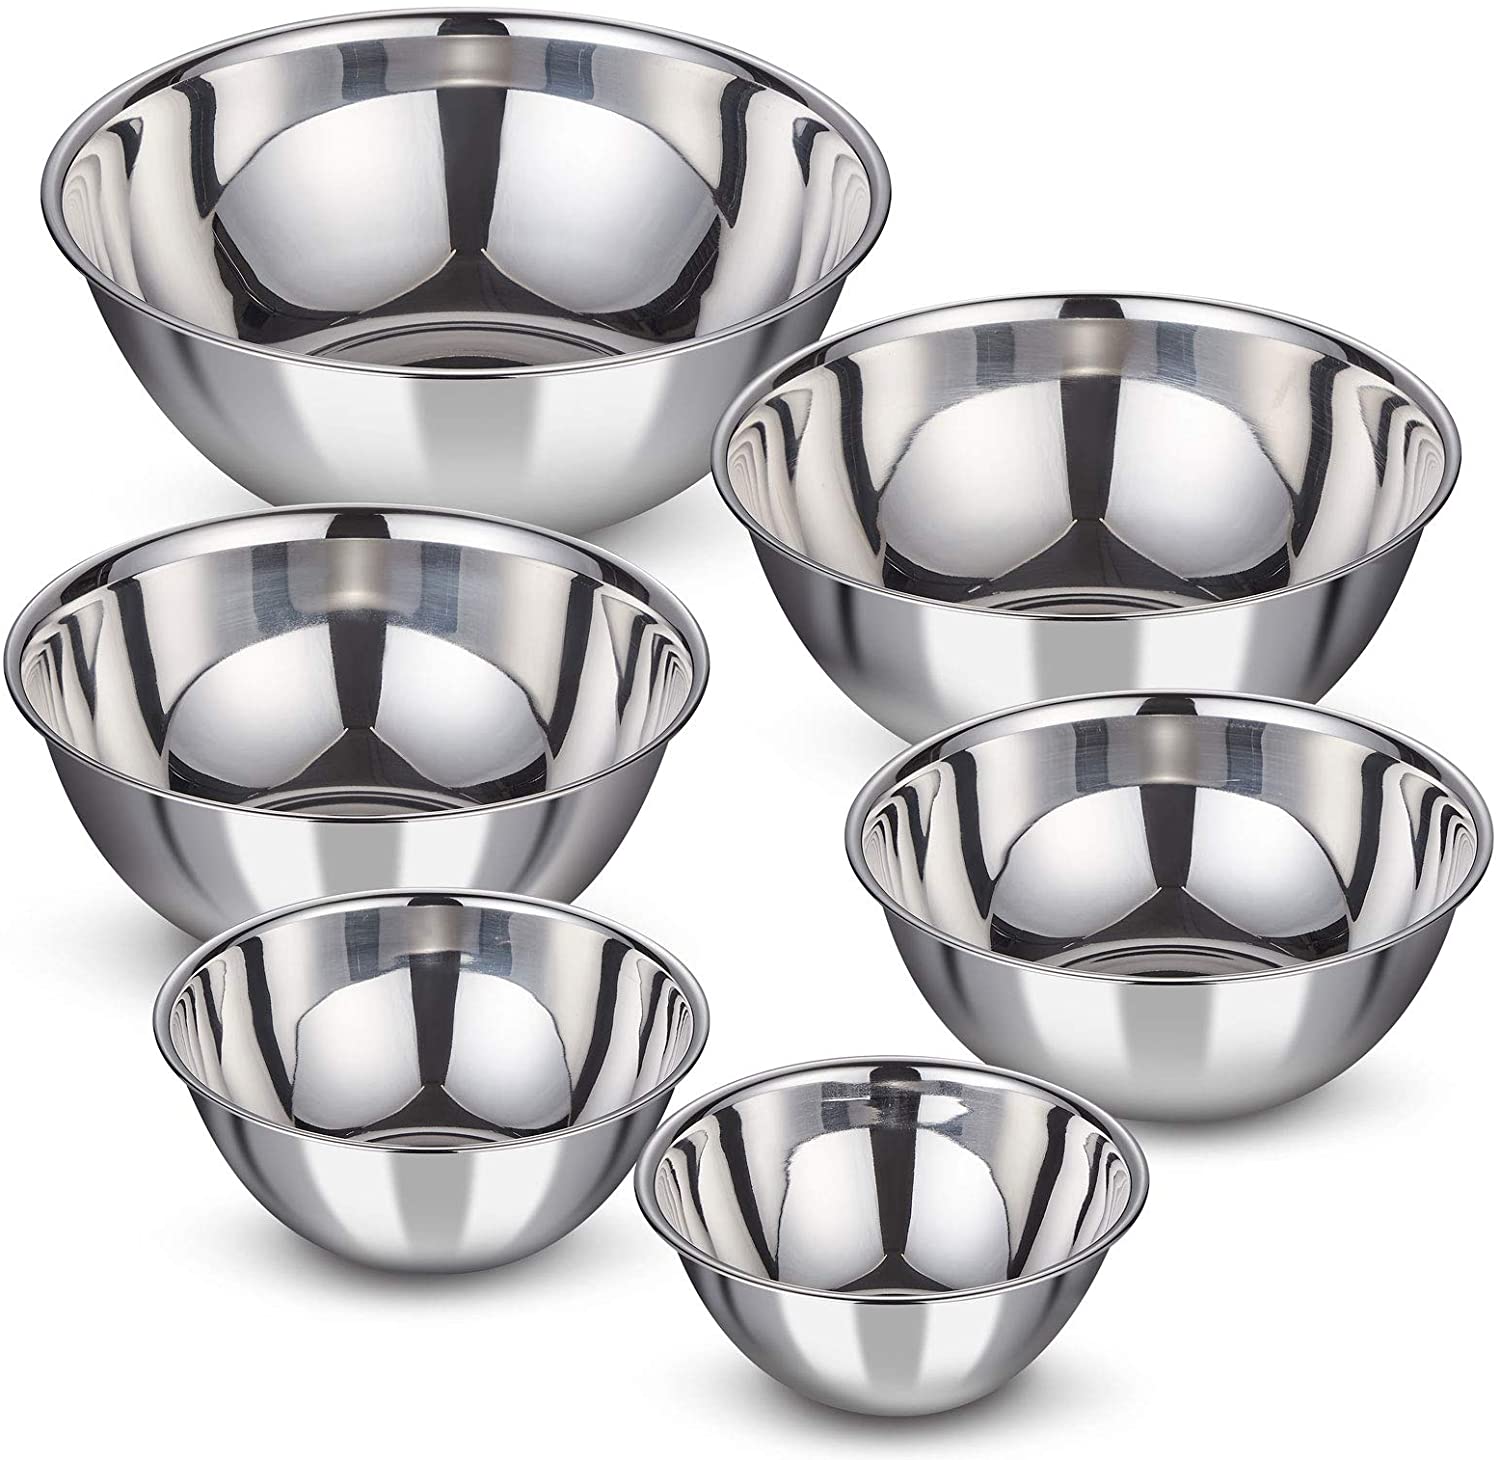 WEZVIX Stainless Steel Set of 6 Mixing Bowls Polished Mirror Finish ...